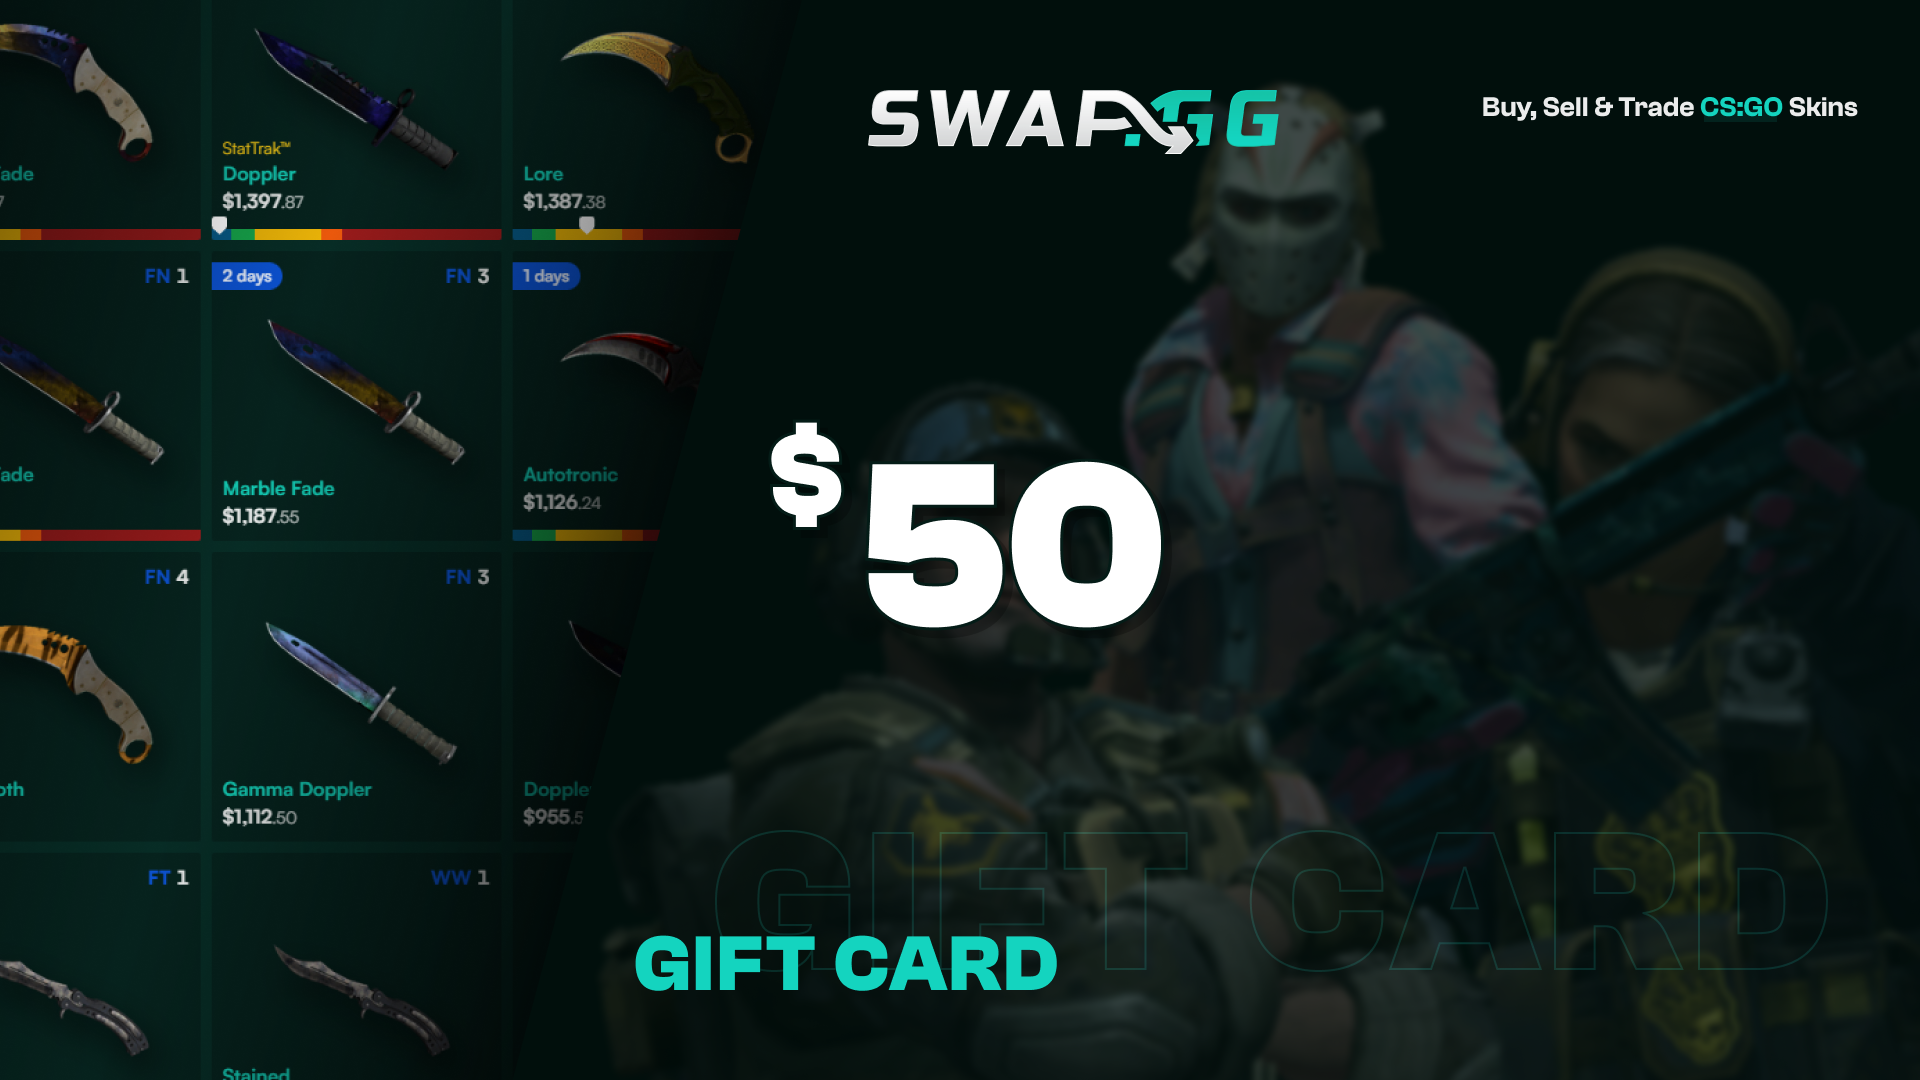 Swap.gg $50 Gift Card